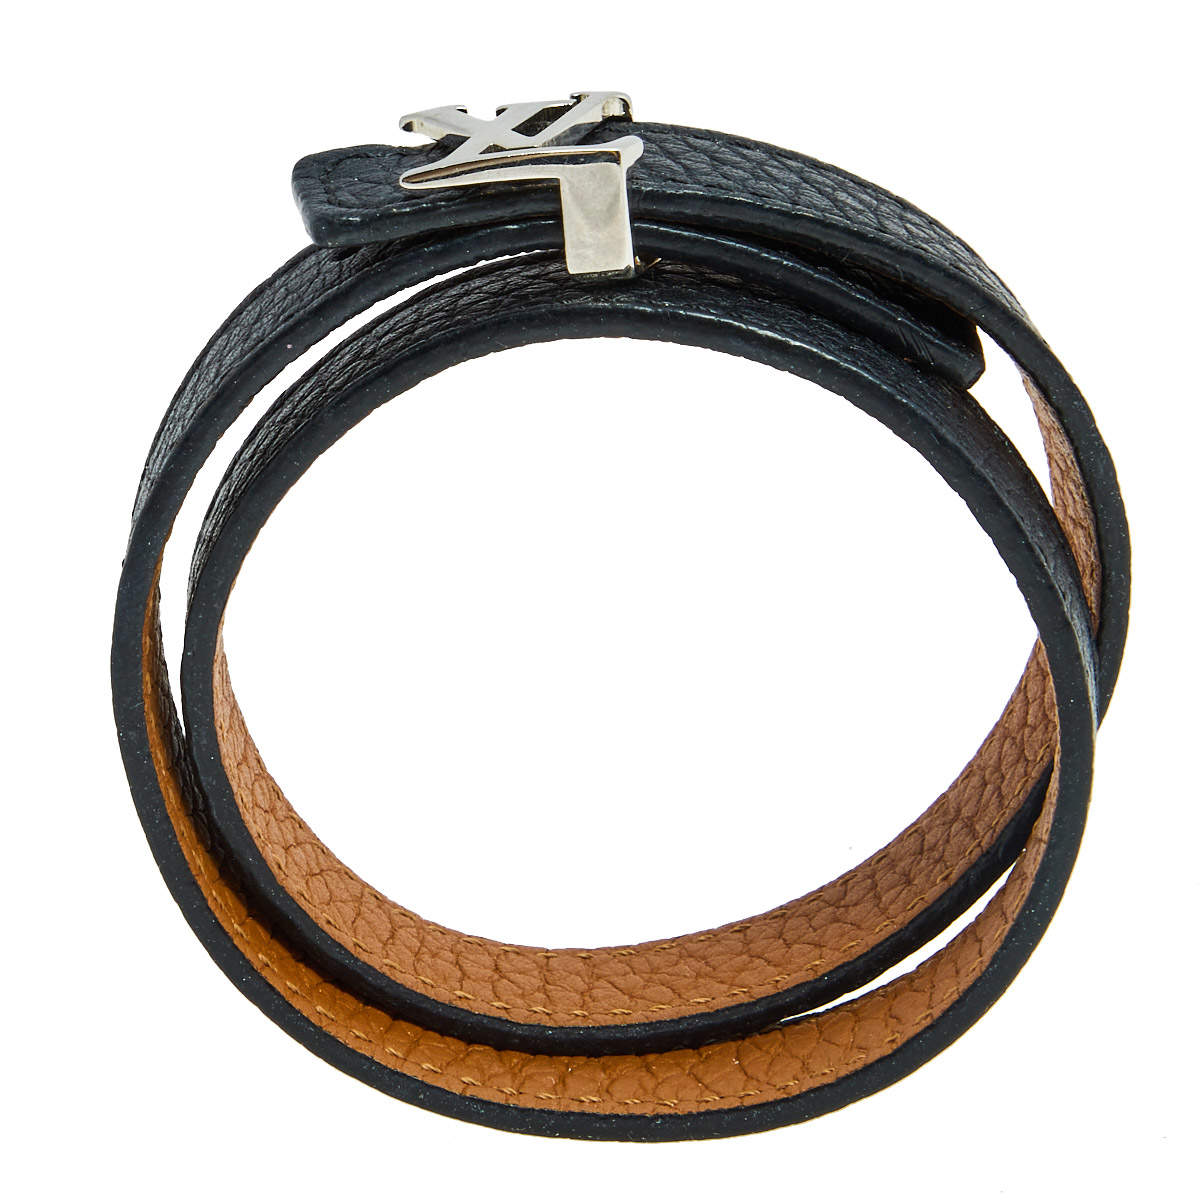 MATAology 歐洲精品代購- Louis Vuitton fasten your LV bracelet 夏天手上一定不能沒有飾品.  Line帳號：@ngz0073s（連同@一起） IG：www.instagram.com